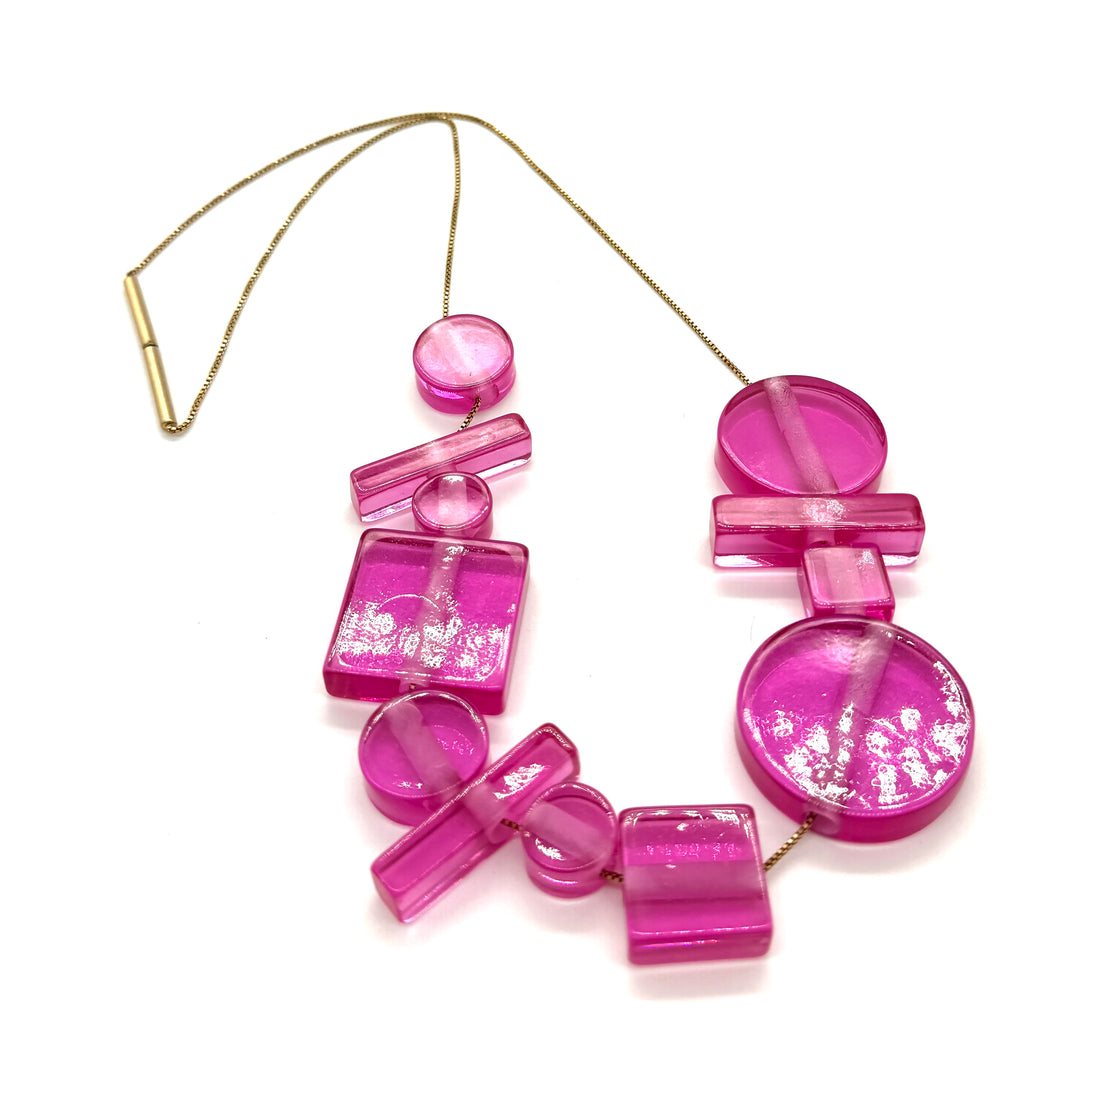 OOAK - Vintage Pink Lucite Geometry Necklace *Final Sale*